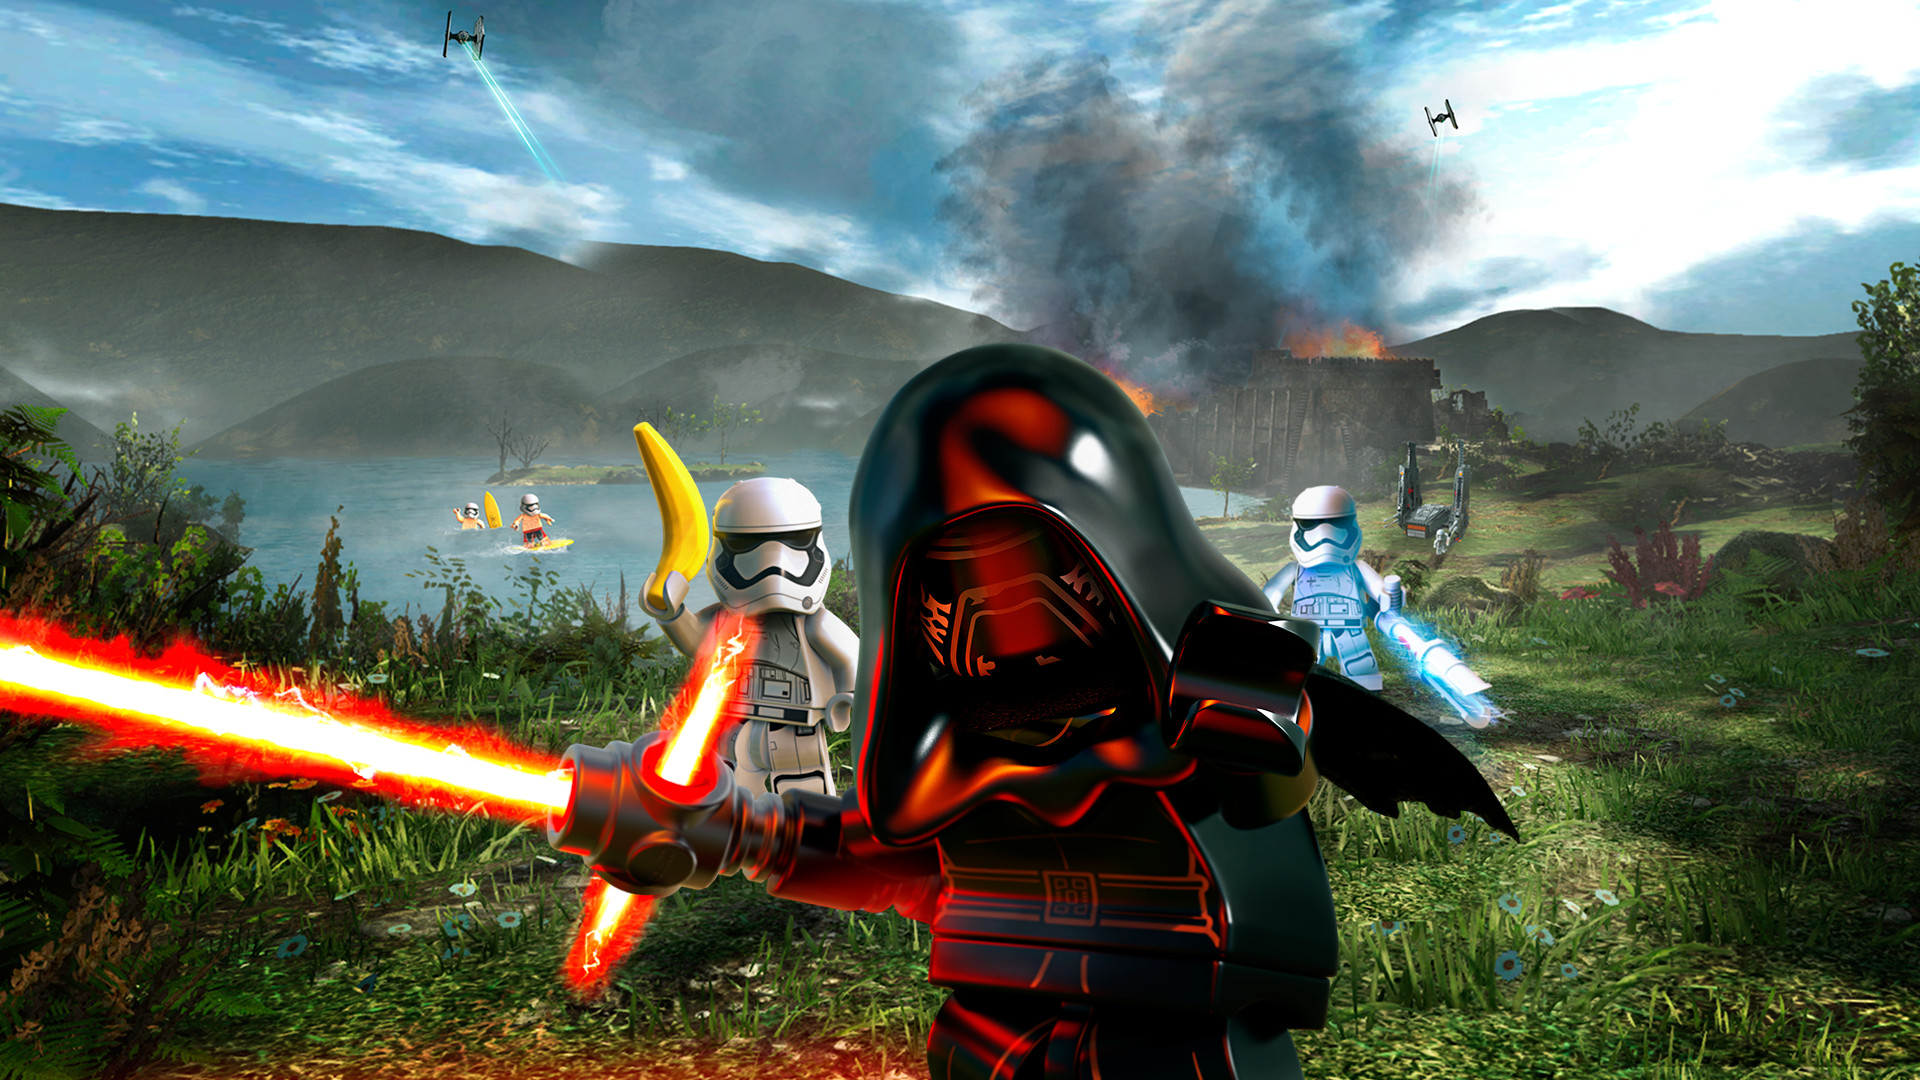 LEGO Star Wars: The Force Awakens - First Order Siege of Takodana Level Pack DLC Steam CD Key, 2.25 usd